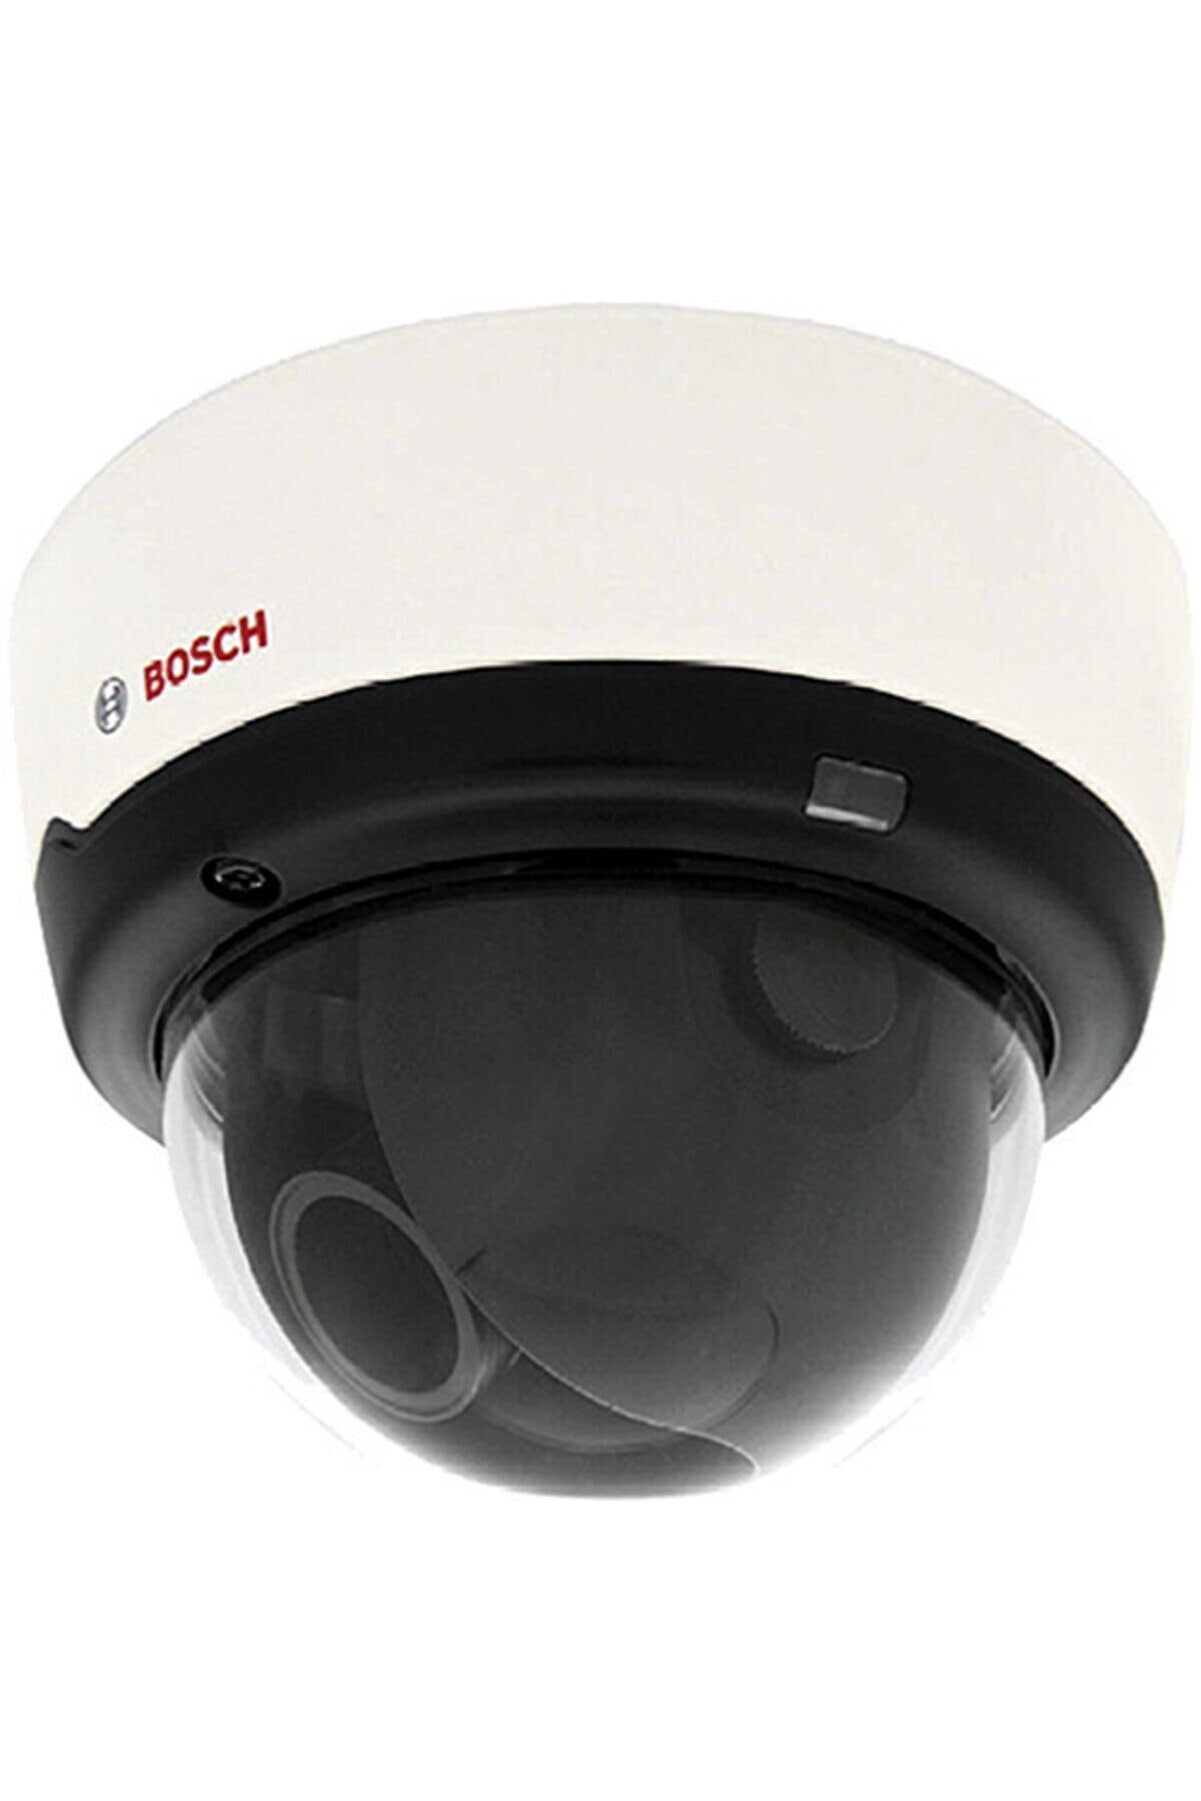 Bosch Ip Dome Kamera Ndc-225-p sabit 4mm Lens, F1.5